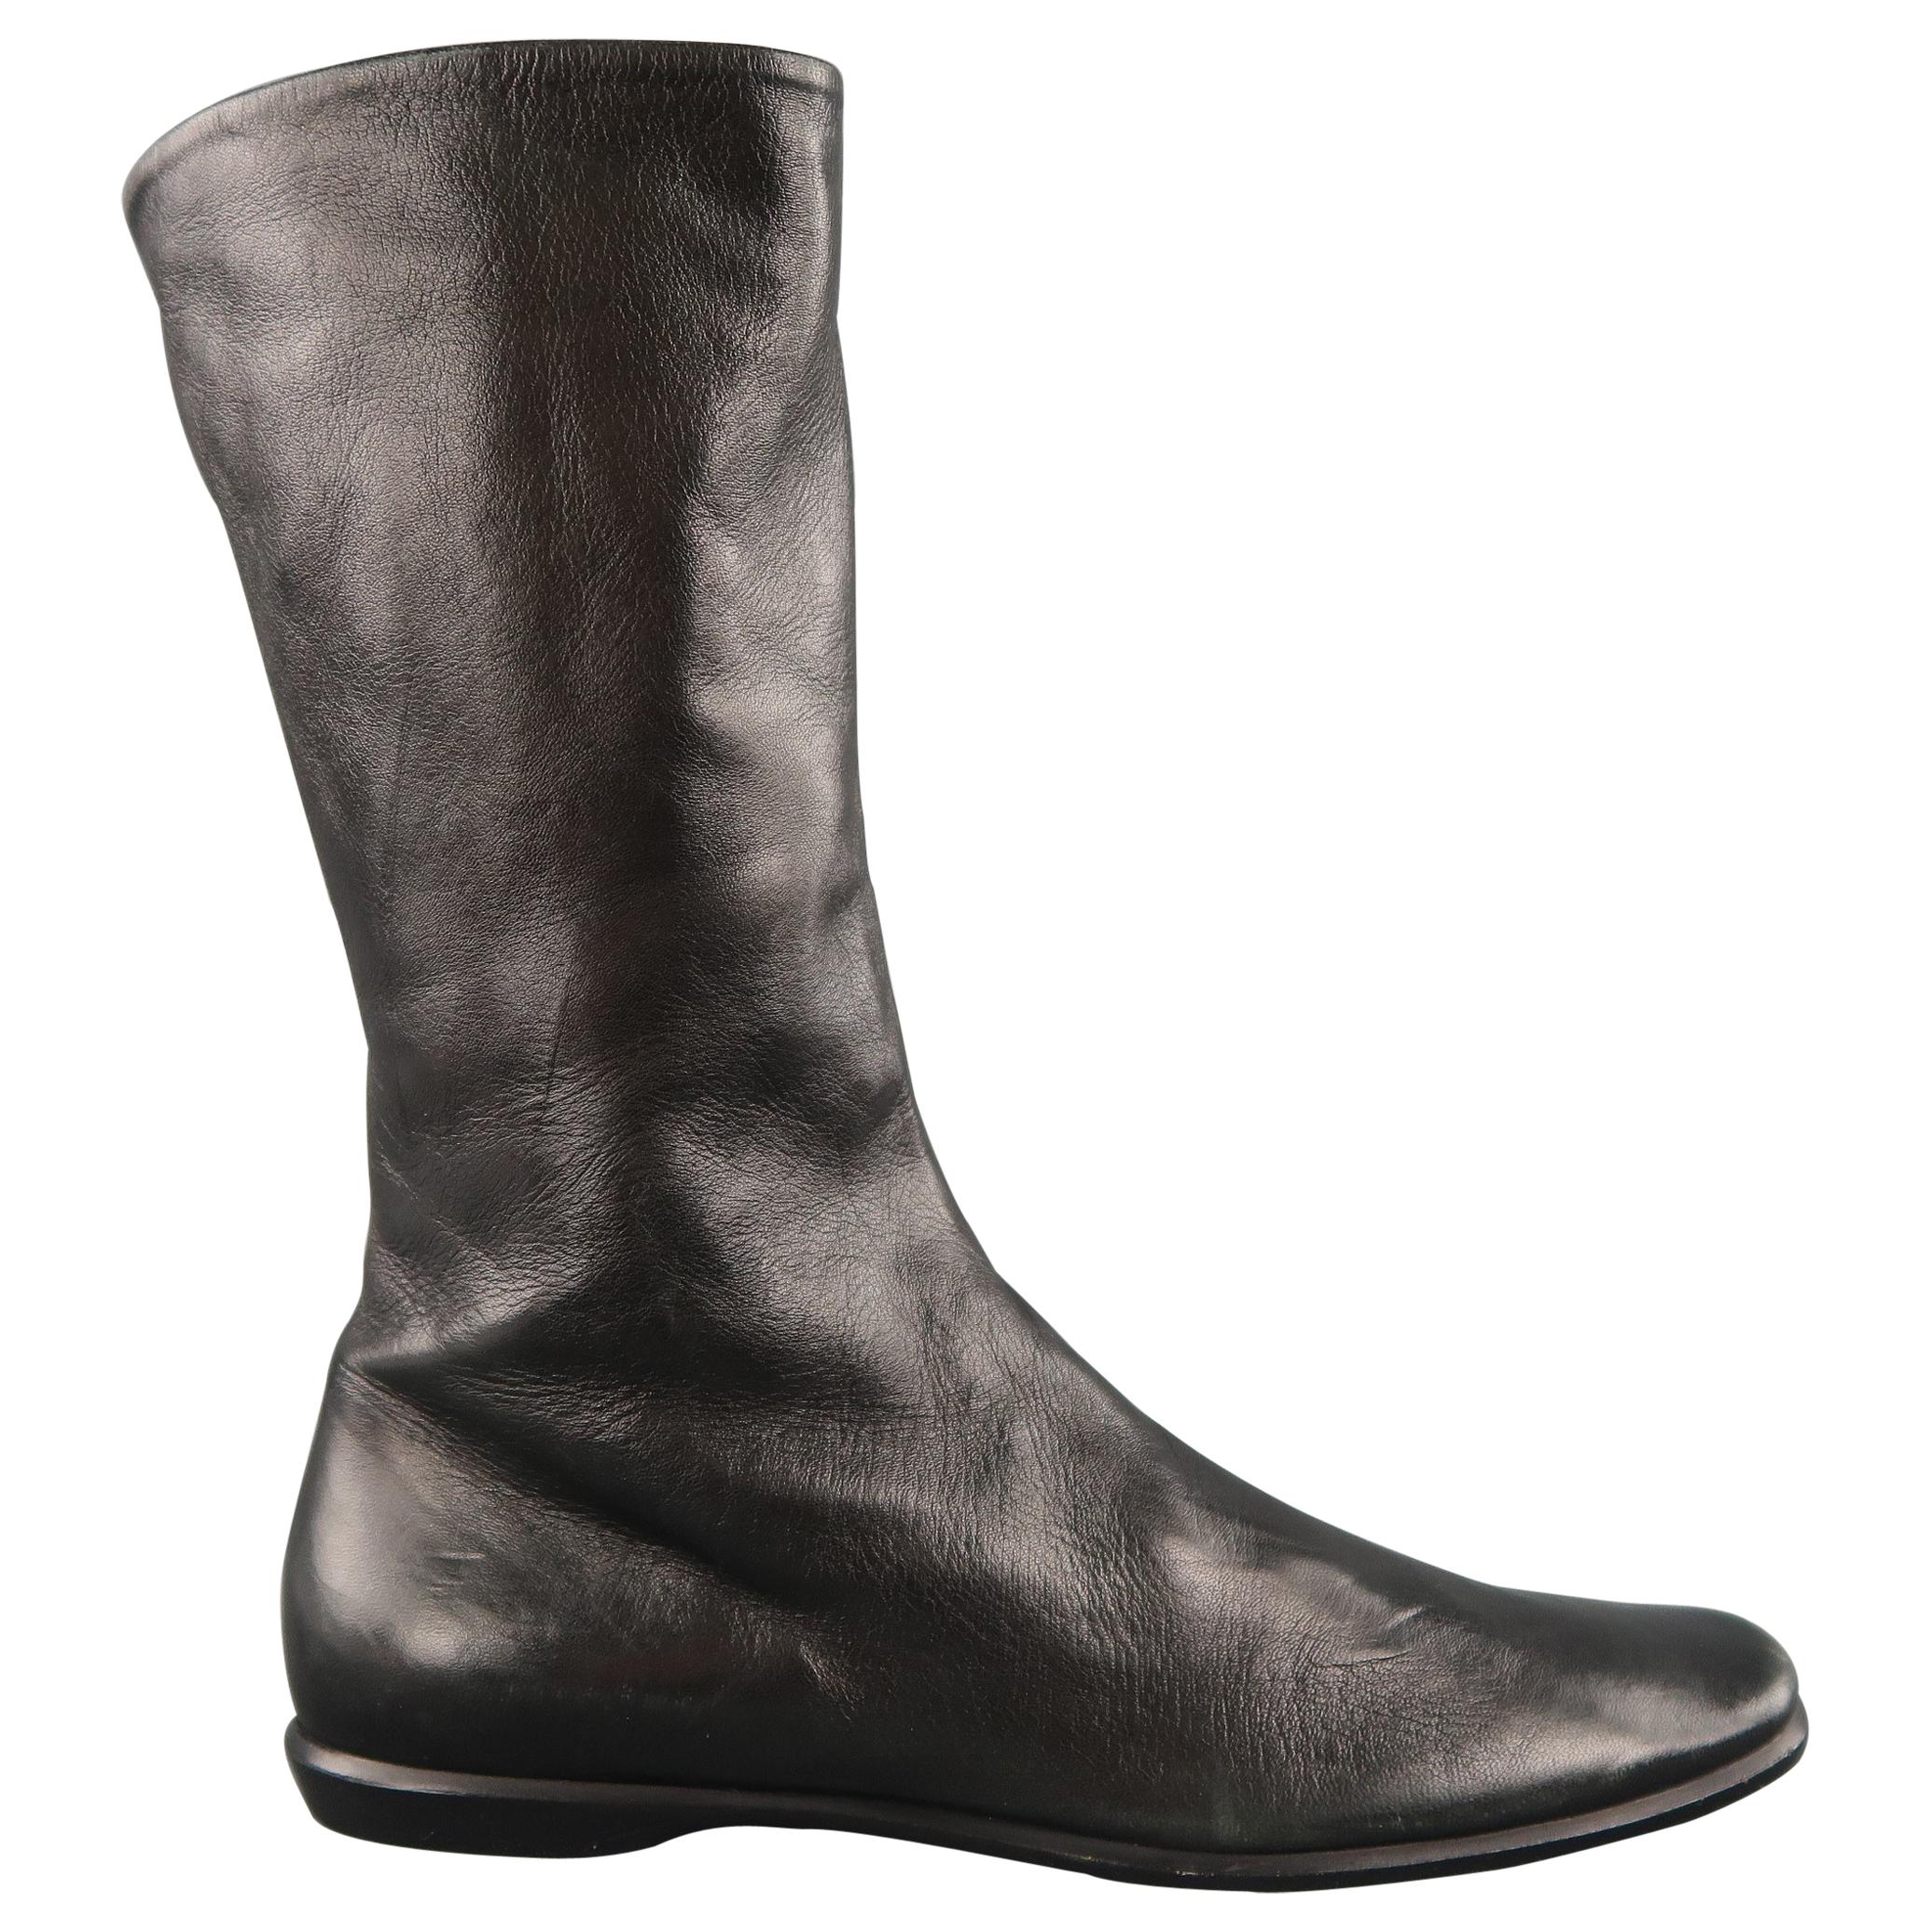 JIL SANDER Size 6 Black Leather Flat Calf High Boots